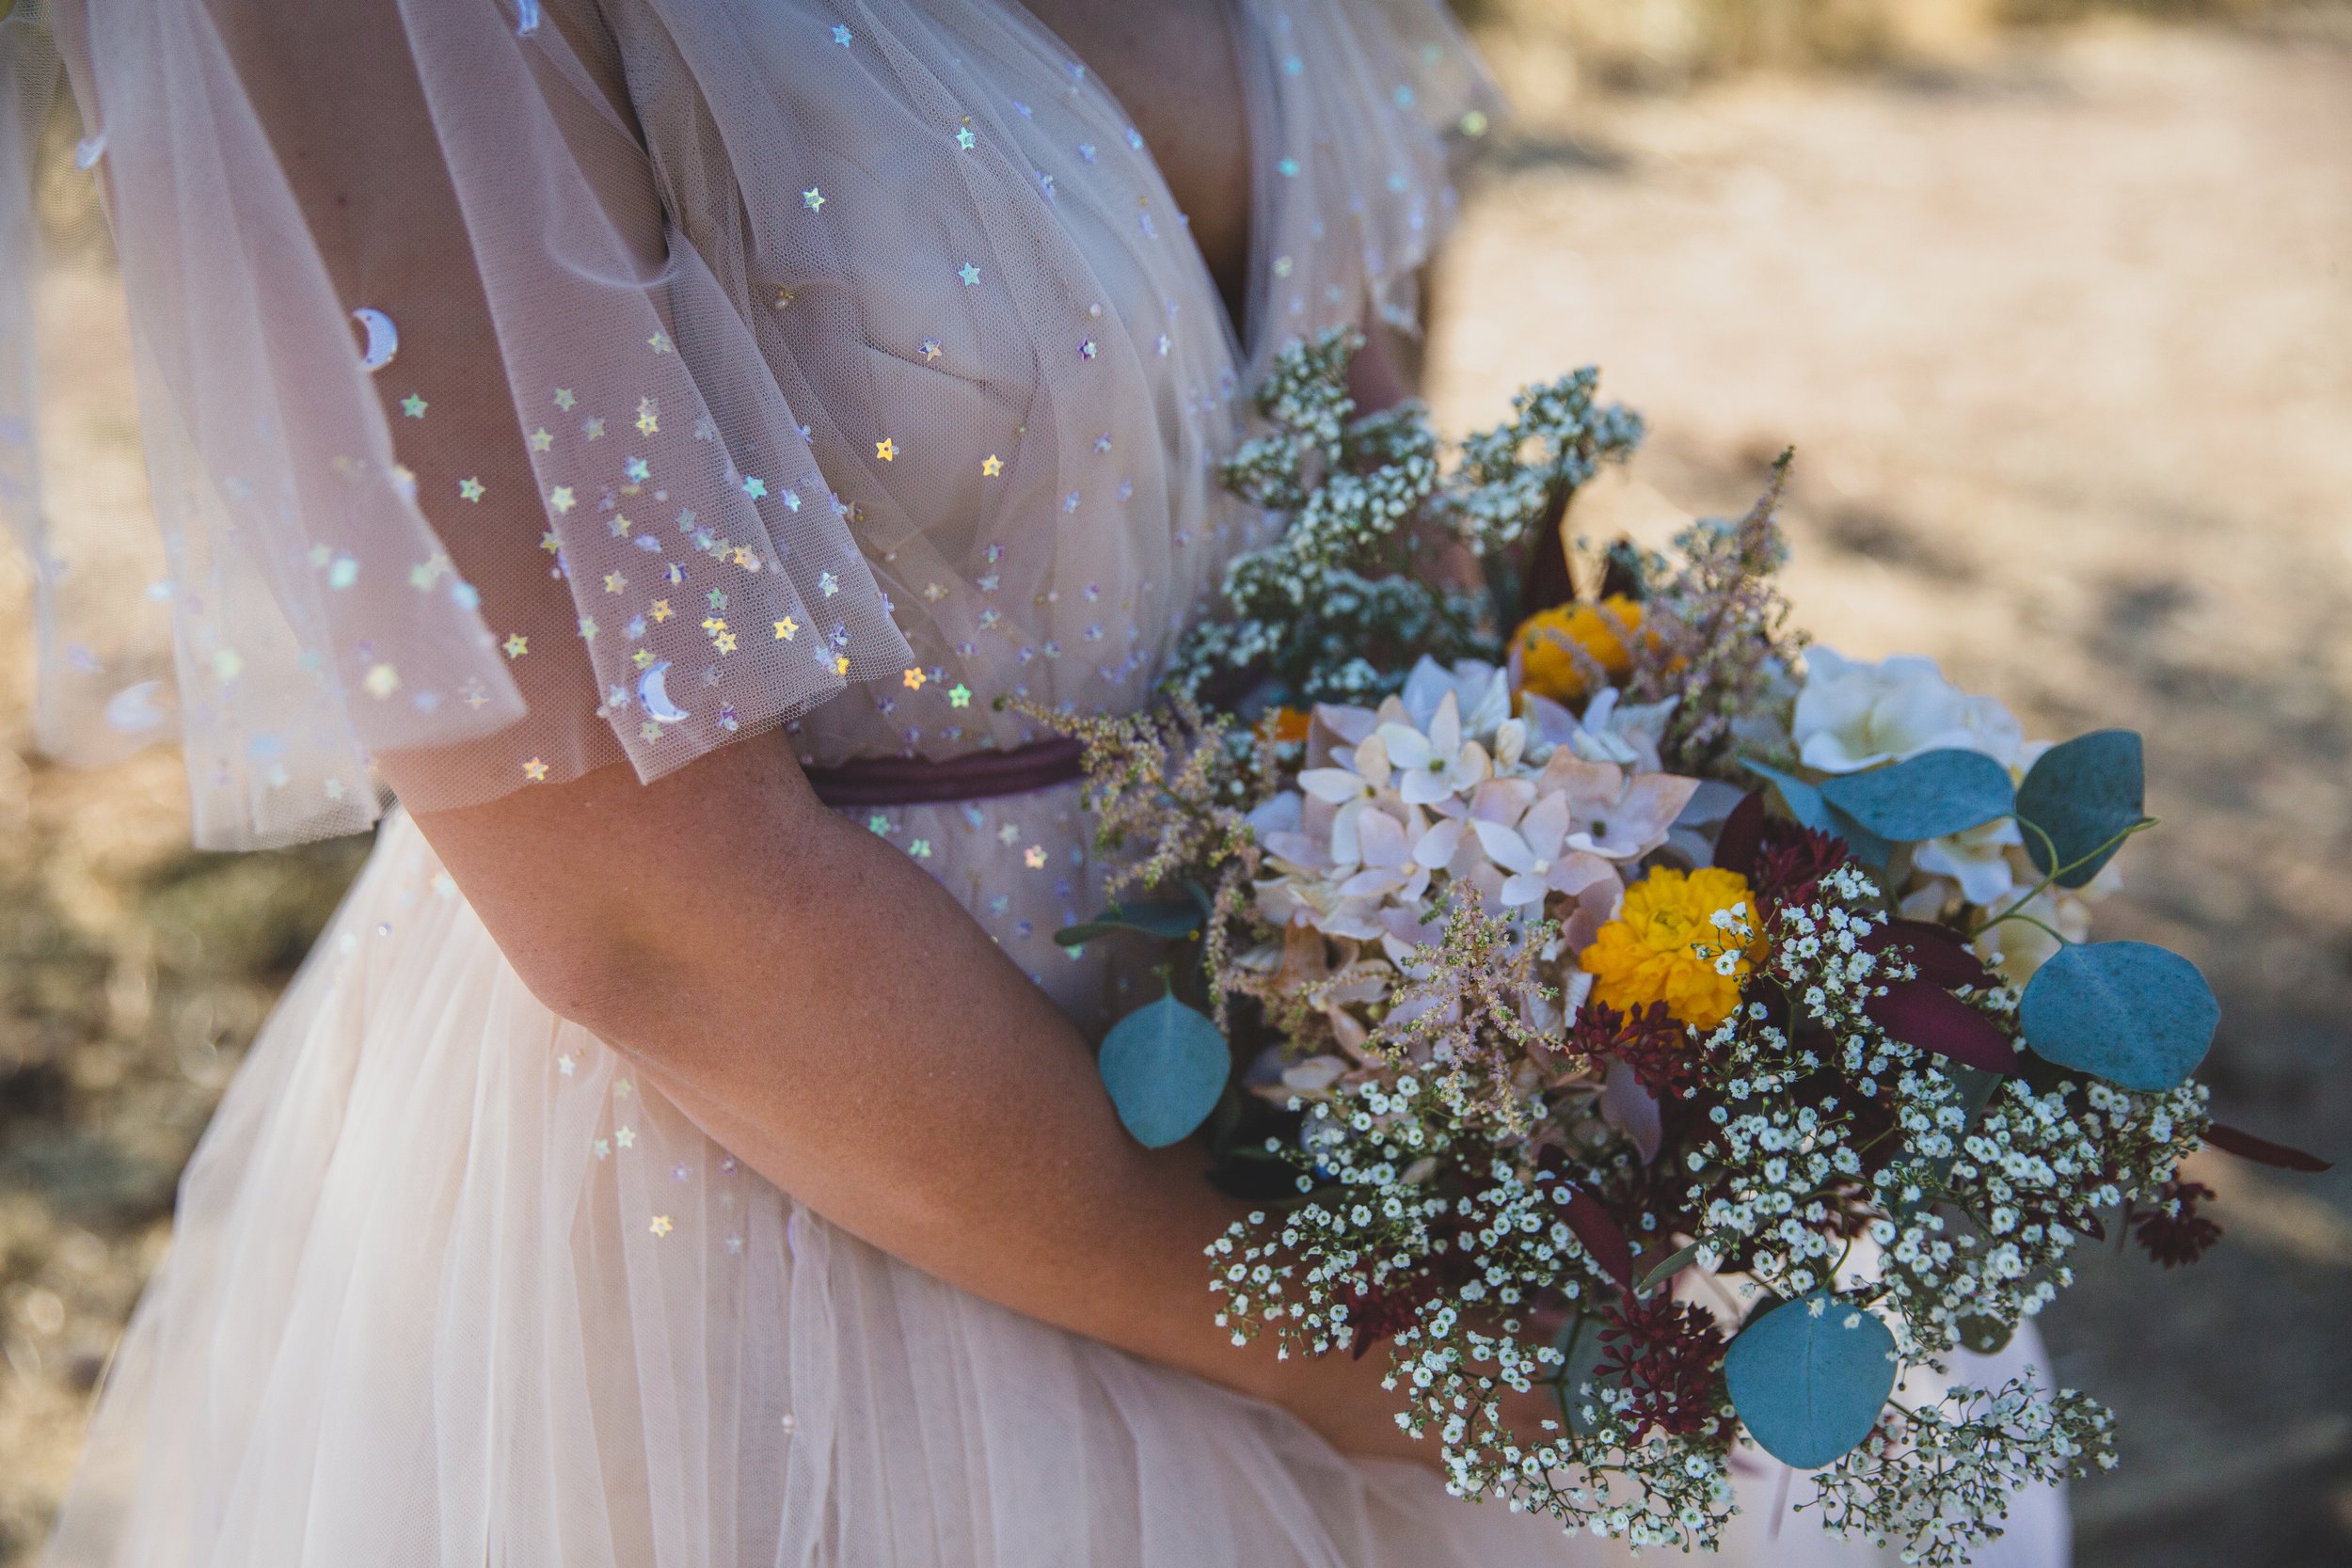 Bride and her wildflower floral bouquet detail for Superstition Mountain intimate wedding near Phoenix, Arizona by wilderness wedding photographer, Jennifer Lind Schutsky. 